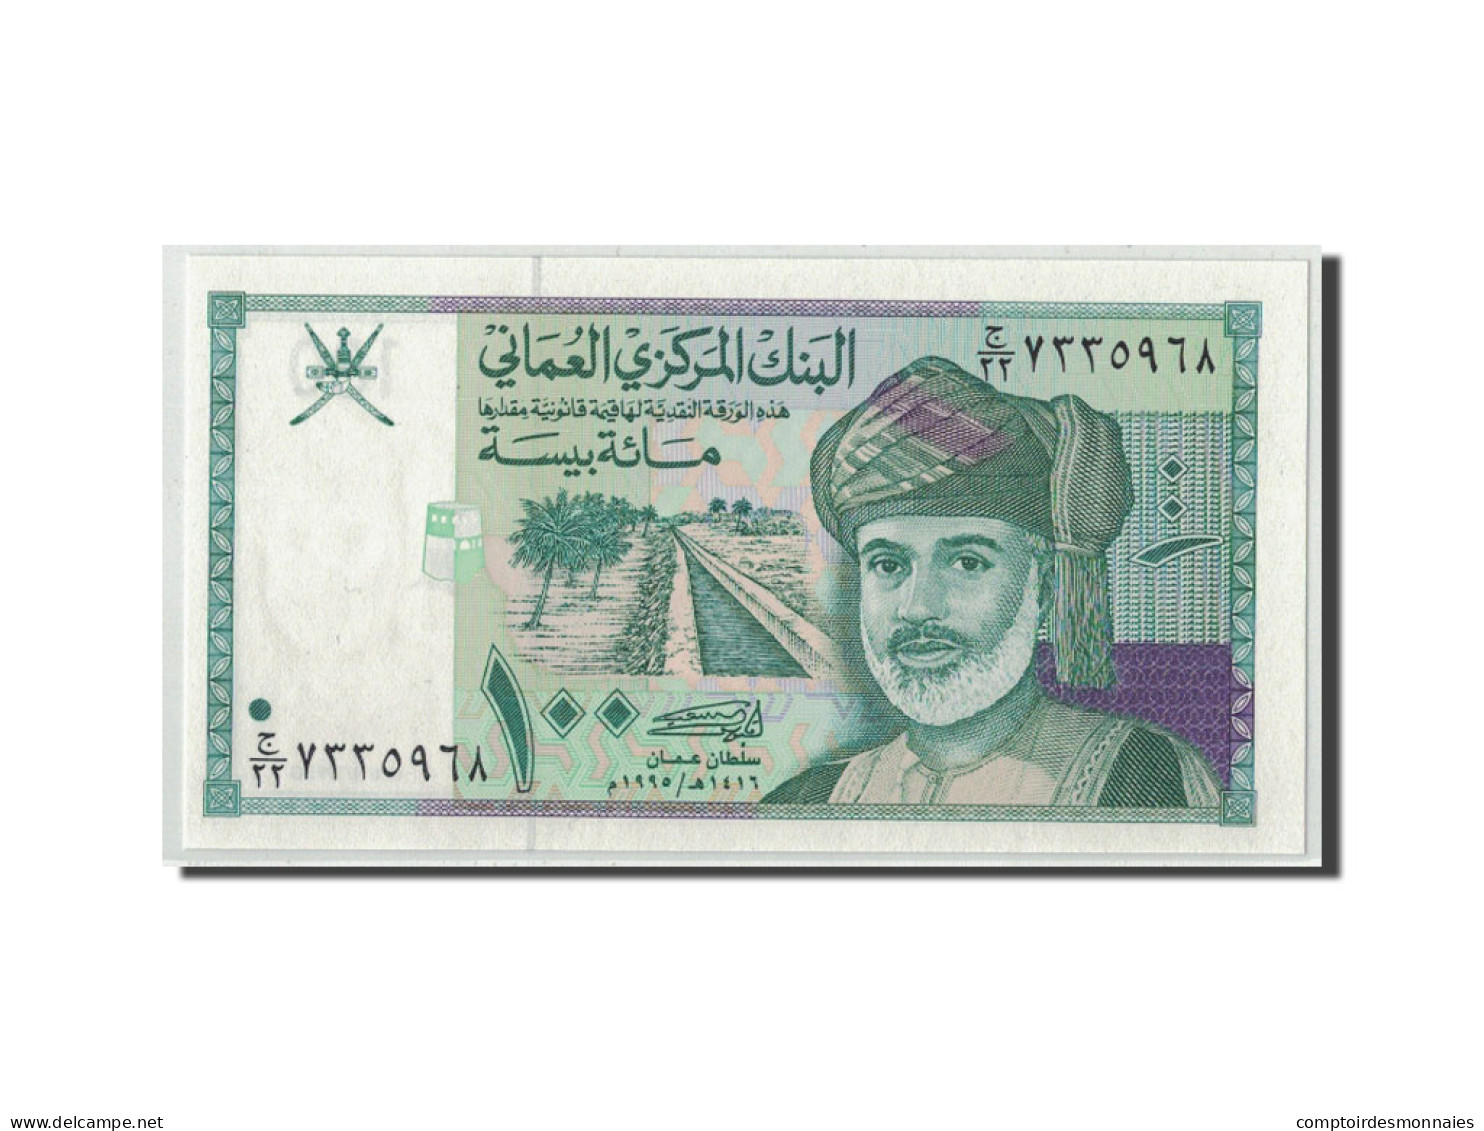 Billet, Oman, 100 Baisa, 1995, KM:31, NEUF - Oman